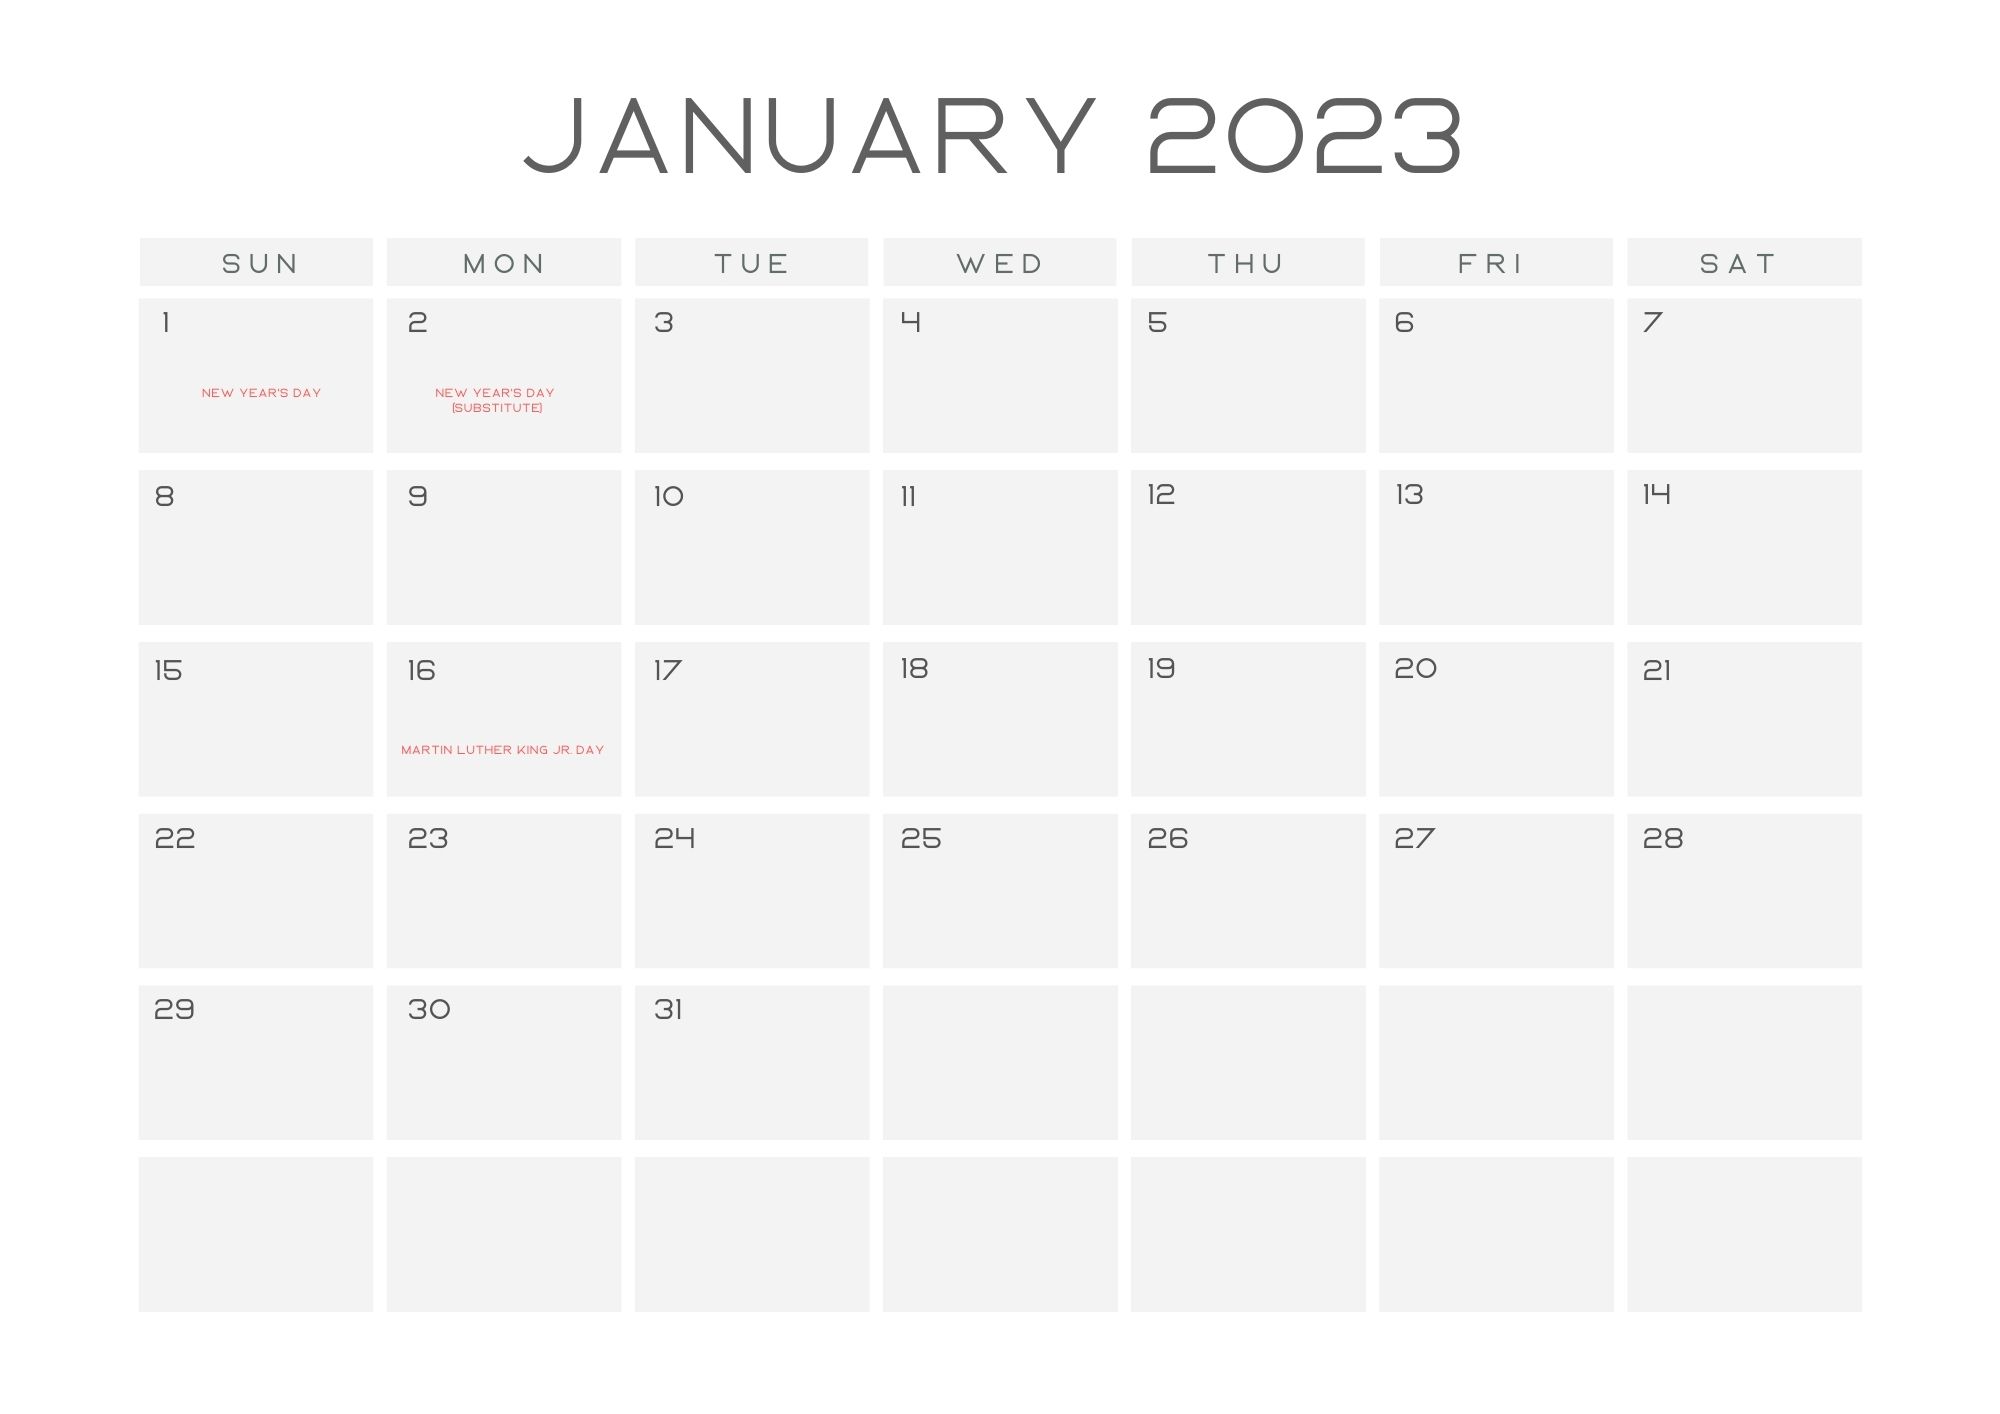 January Calendar 2023 With Holidays